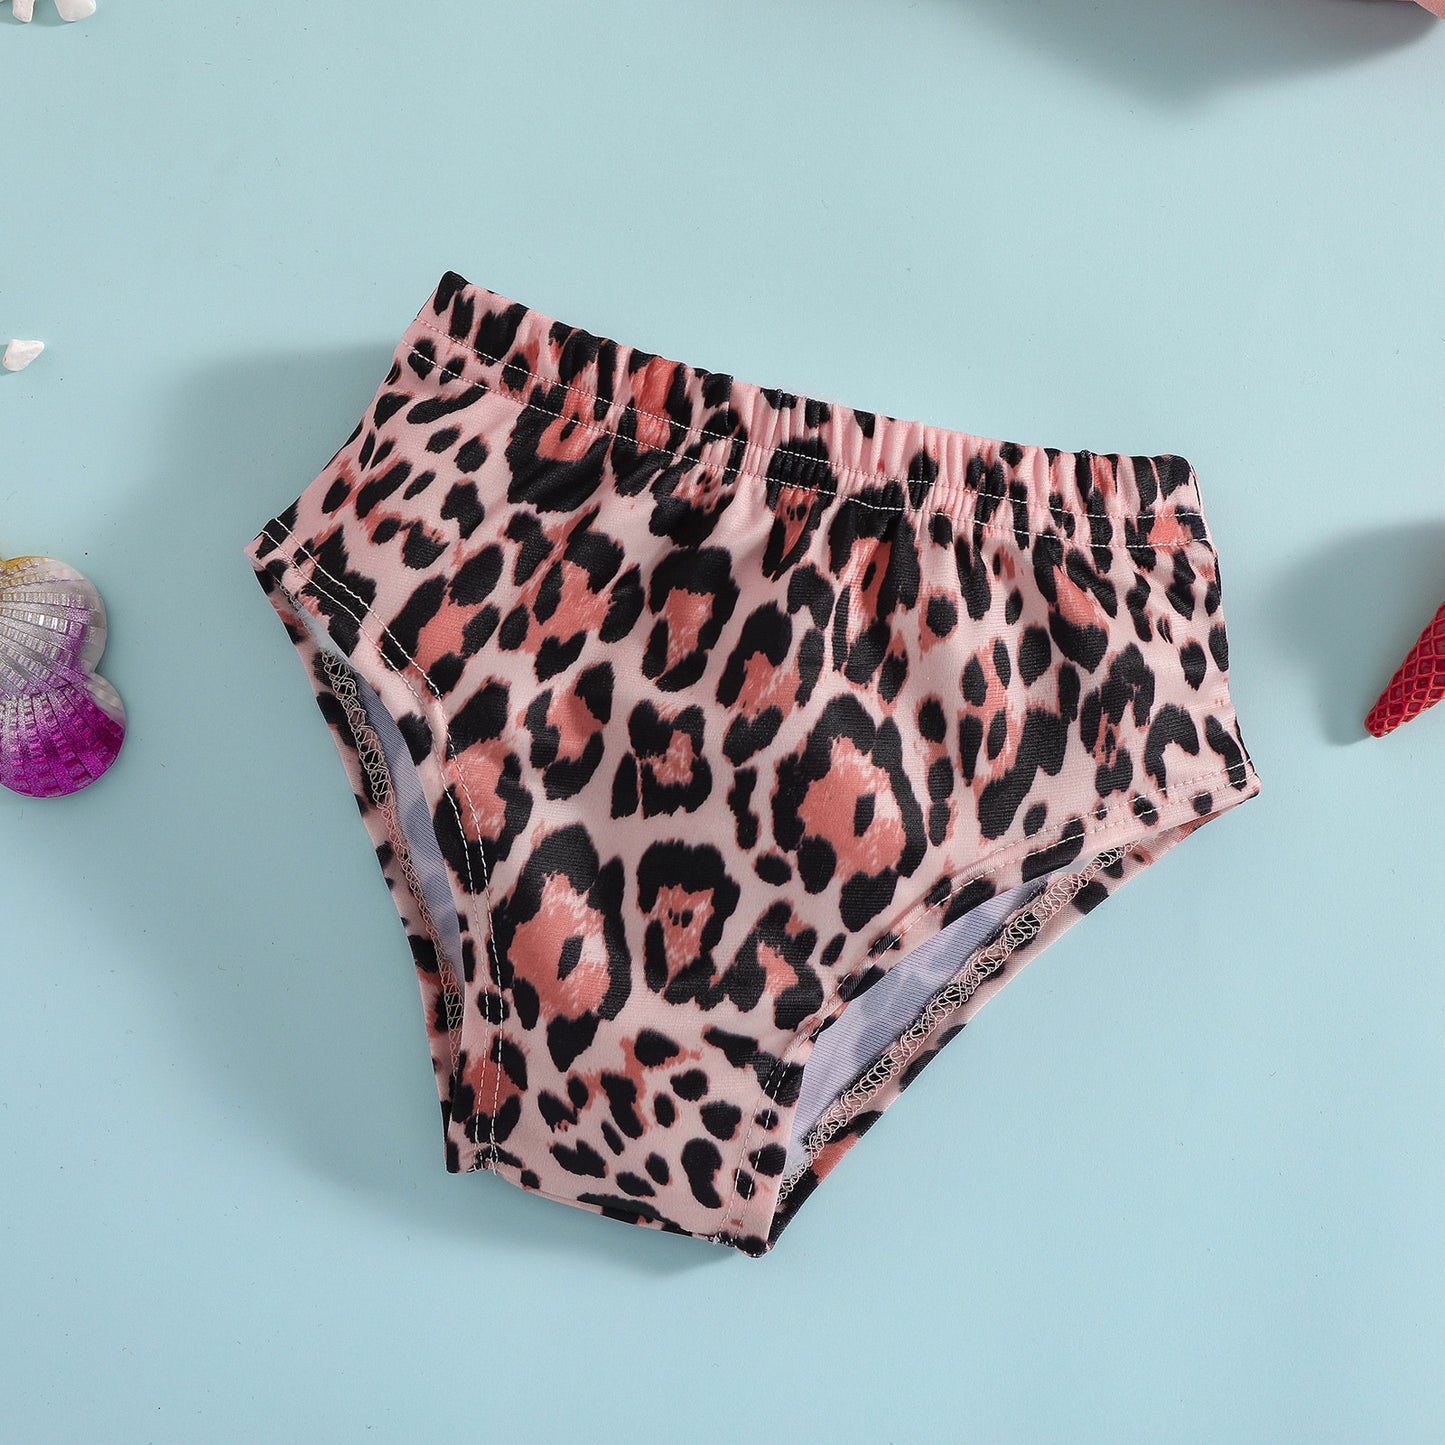 Kids Girl Two-piece Swimsuits Bowknot Halter Crop Tops+Leopard Shorts Fashion Baby Swimwear Beachwear 0-3Years